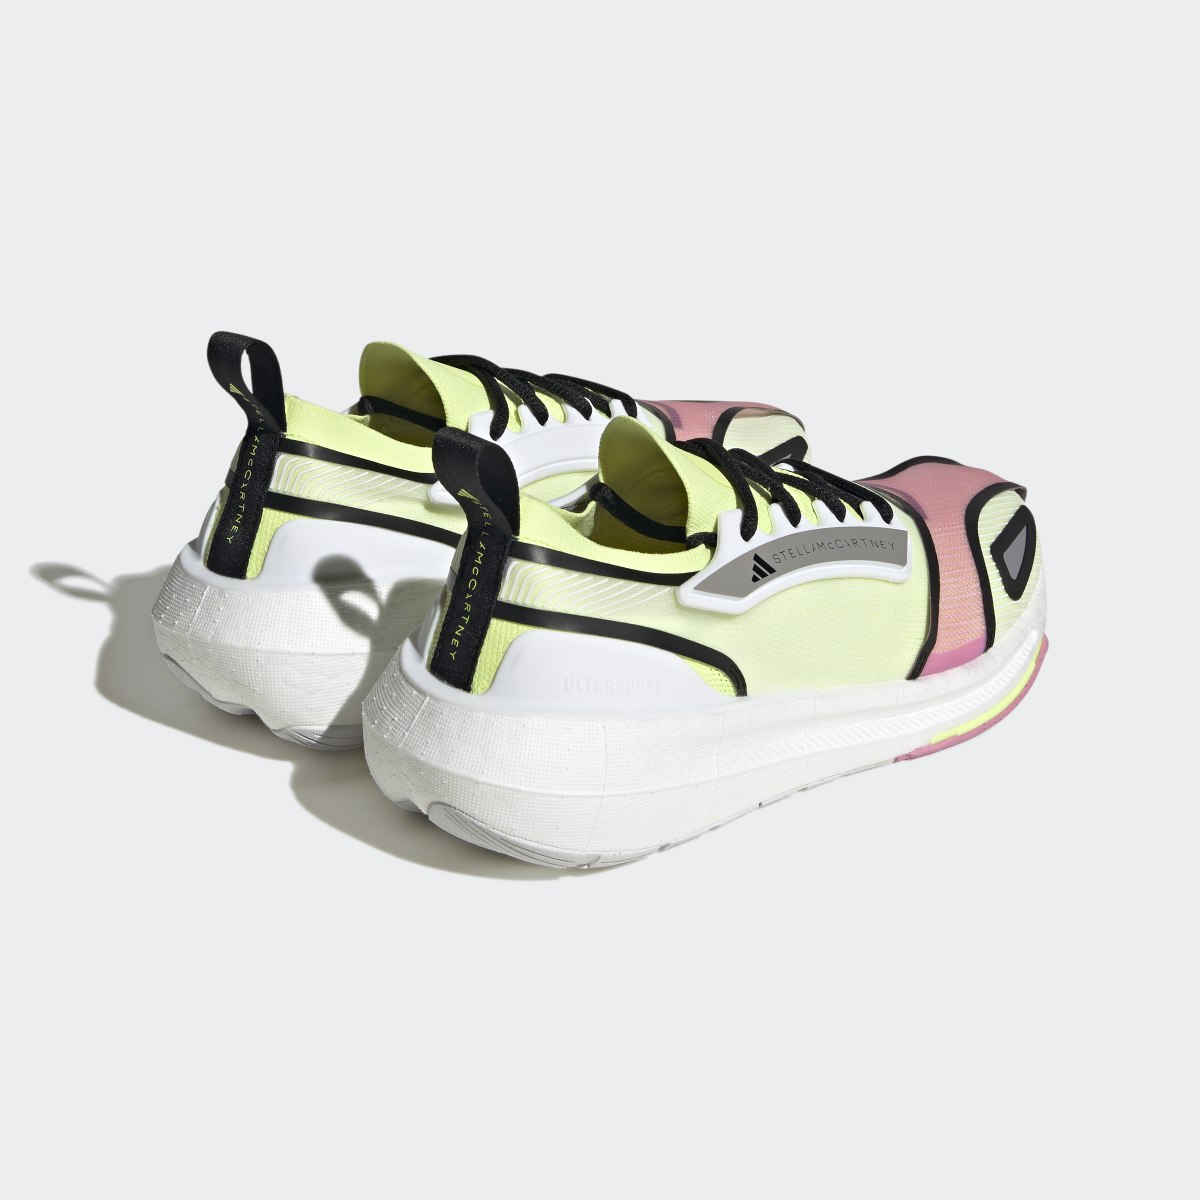 Adidas by Stella McCartney Ultraboost Light Shoes. 9